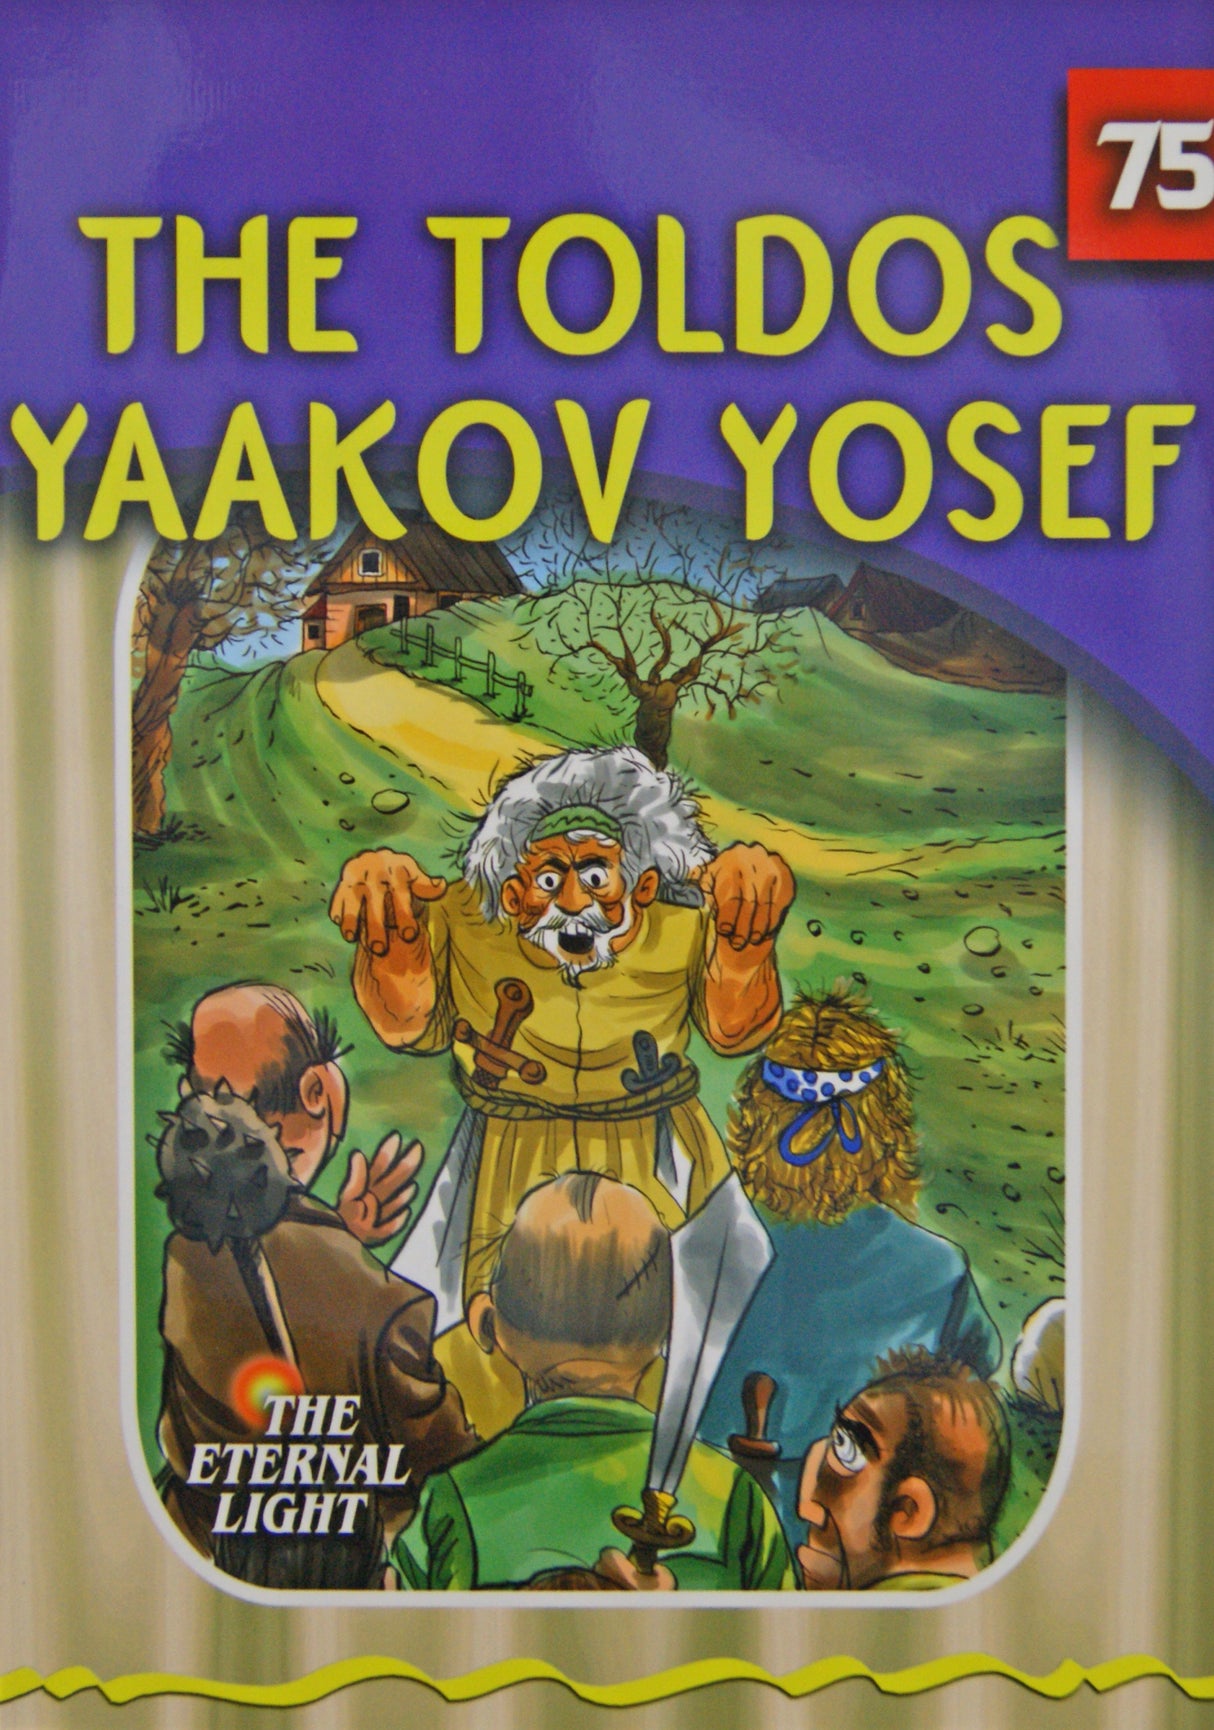 The Toldos Yaakov Yosef (Eternal Light Series 75)